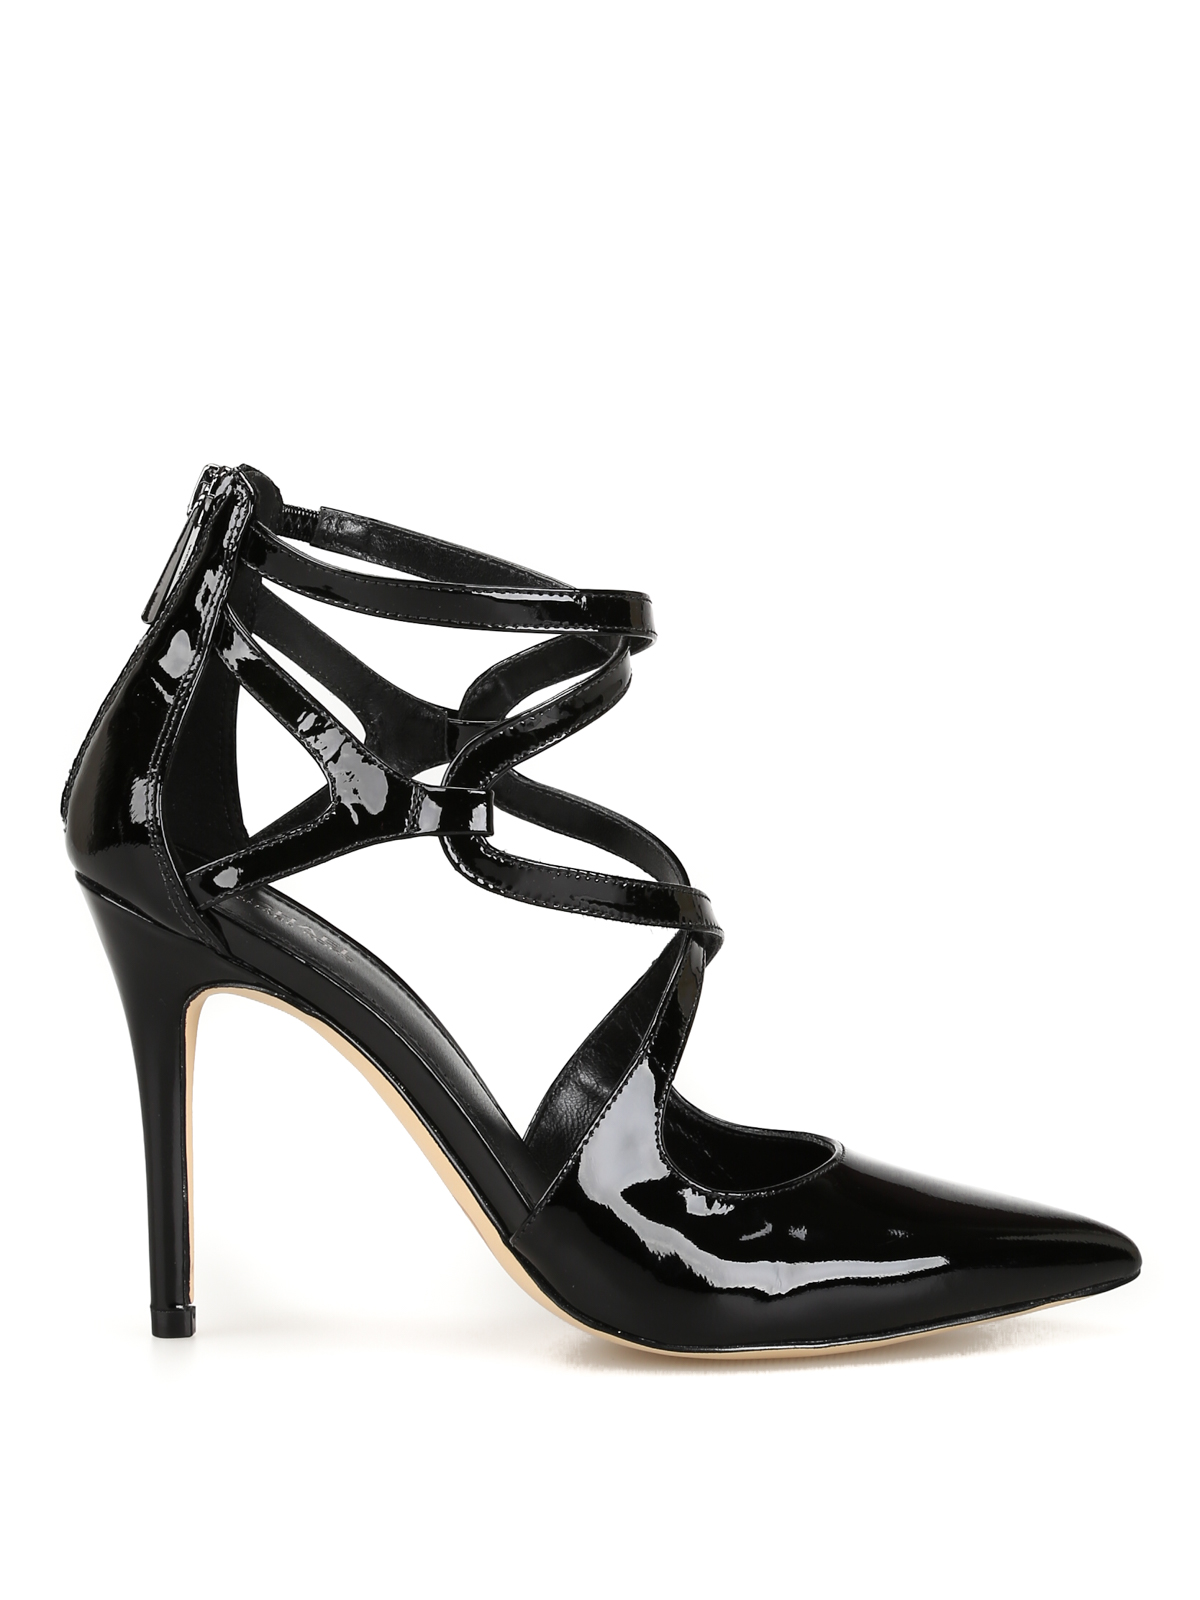 Court shoes Michael Kors - Catia black patent leather slingbacks -  40R9CTHS1A001